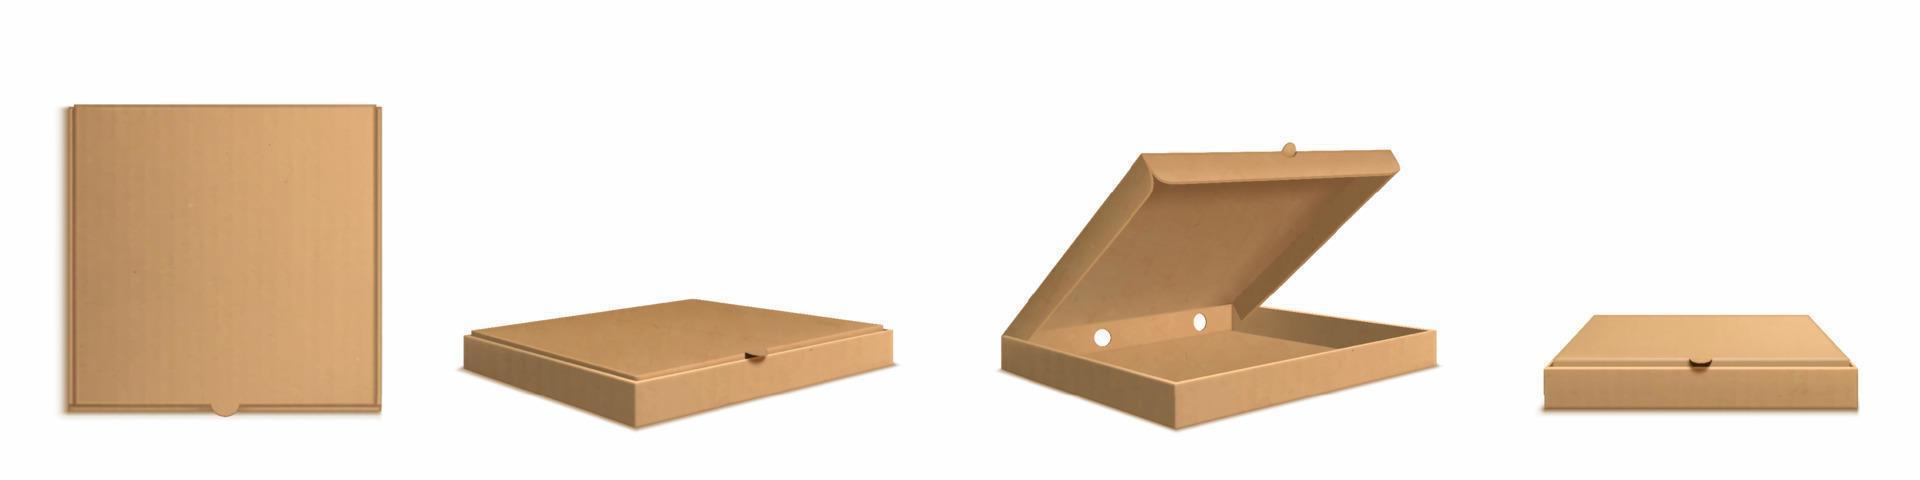 Brown cardboard pizza box 3d realistic vector